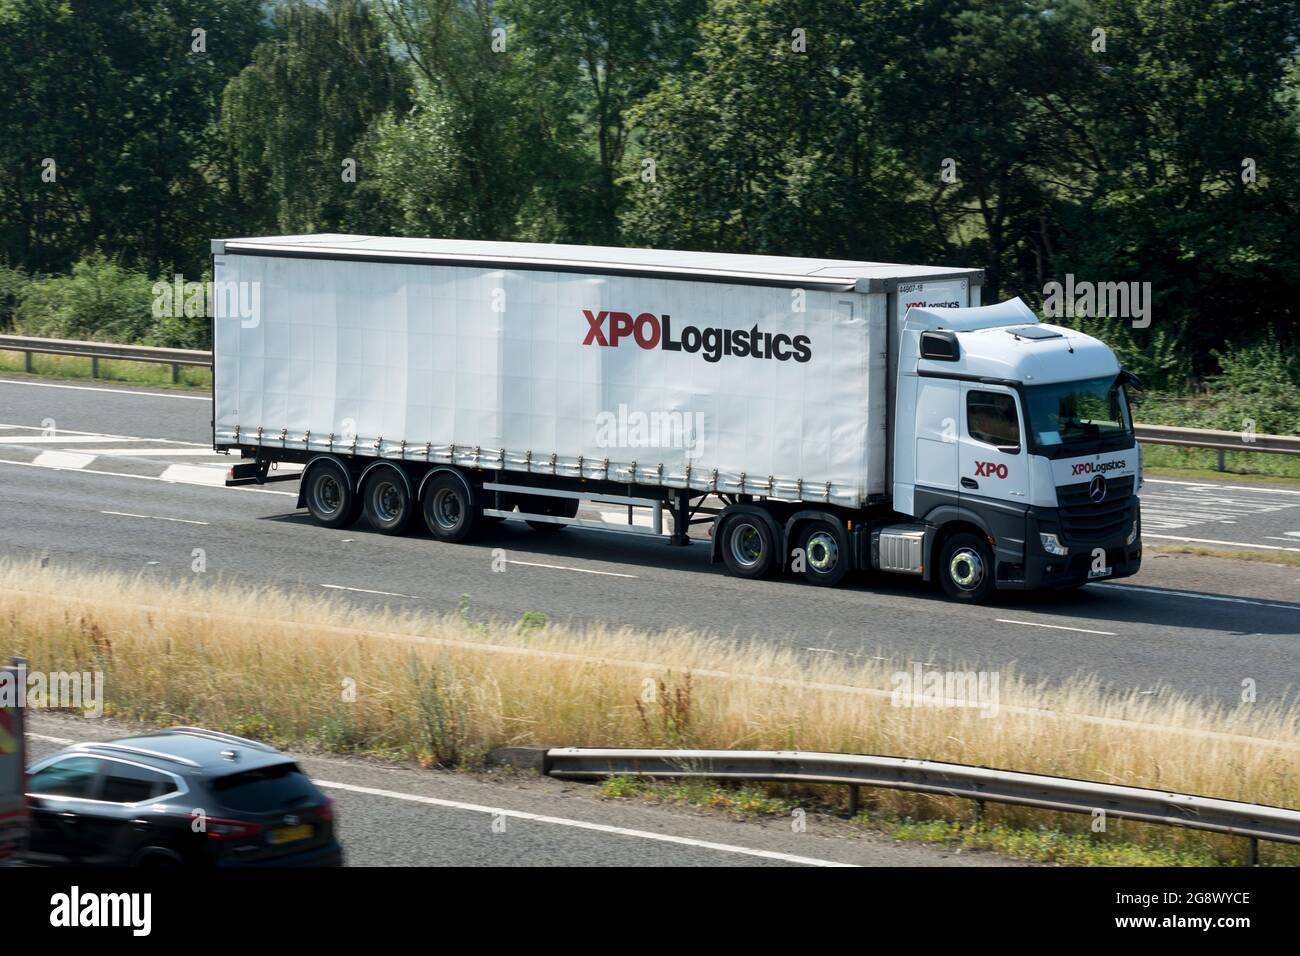 XPO Logistics lorry on the M40 motorway, Warwickshire, UK Stock Photo